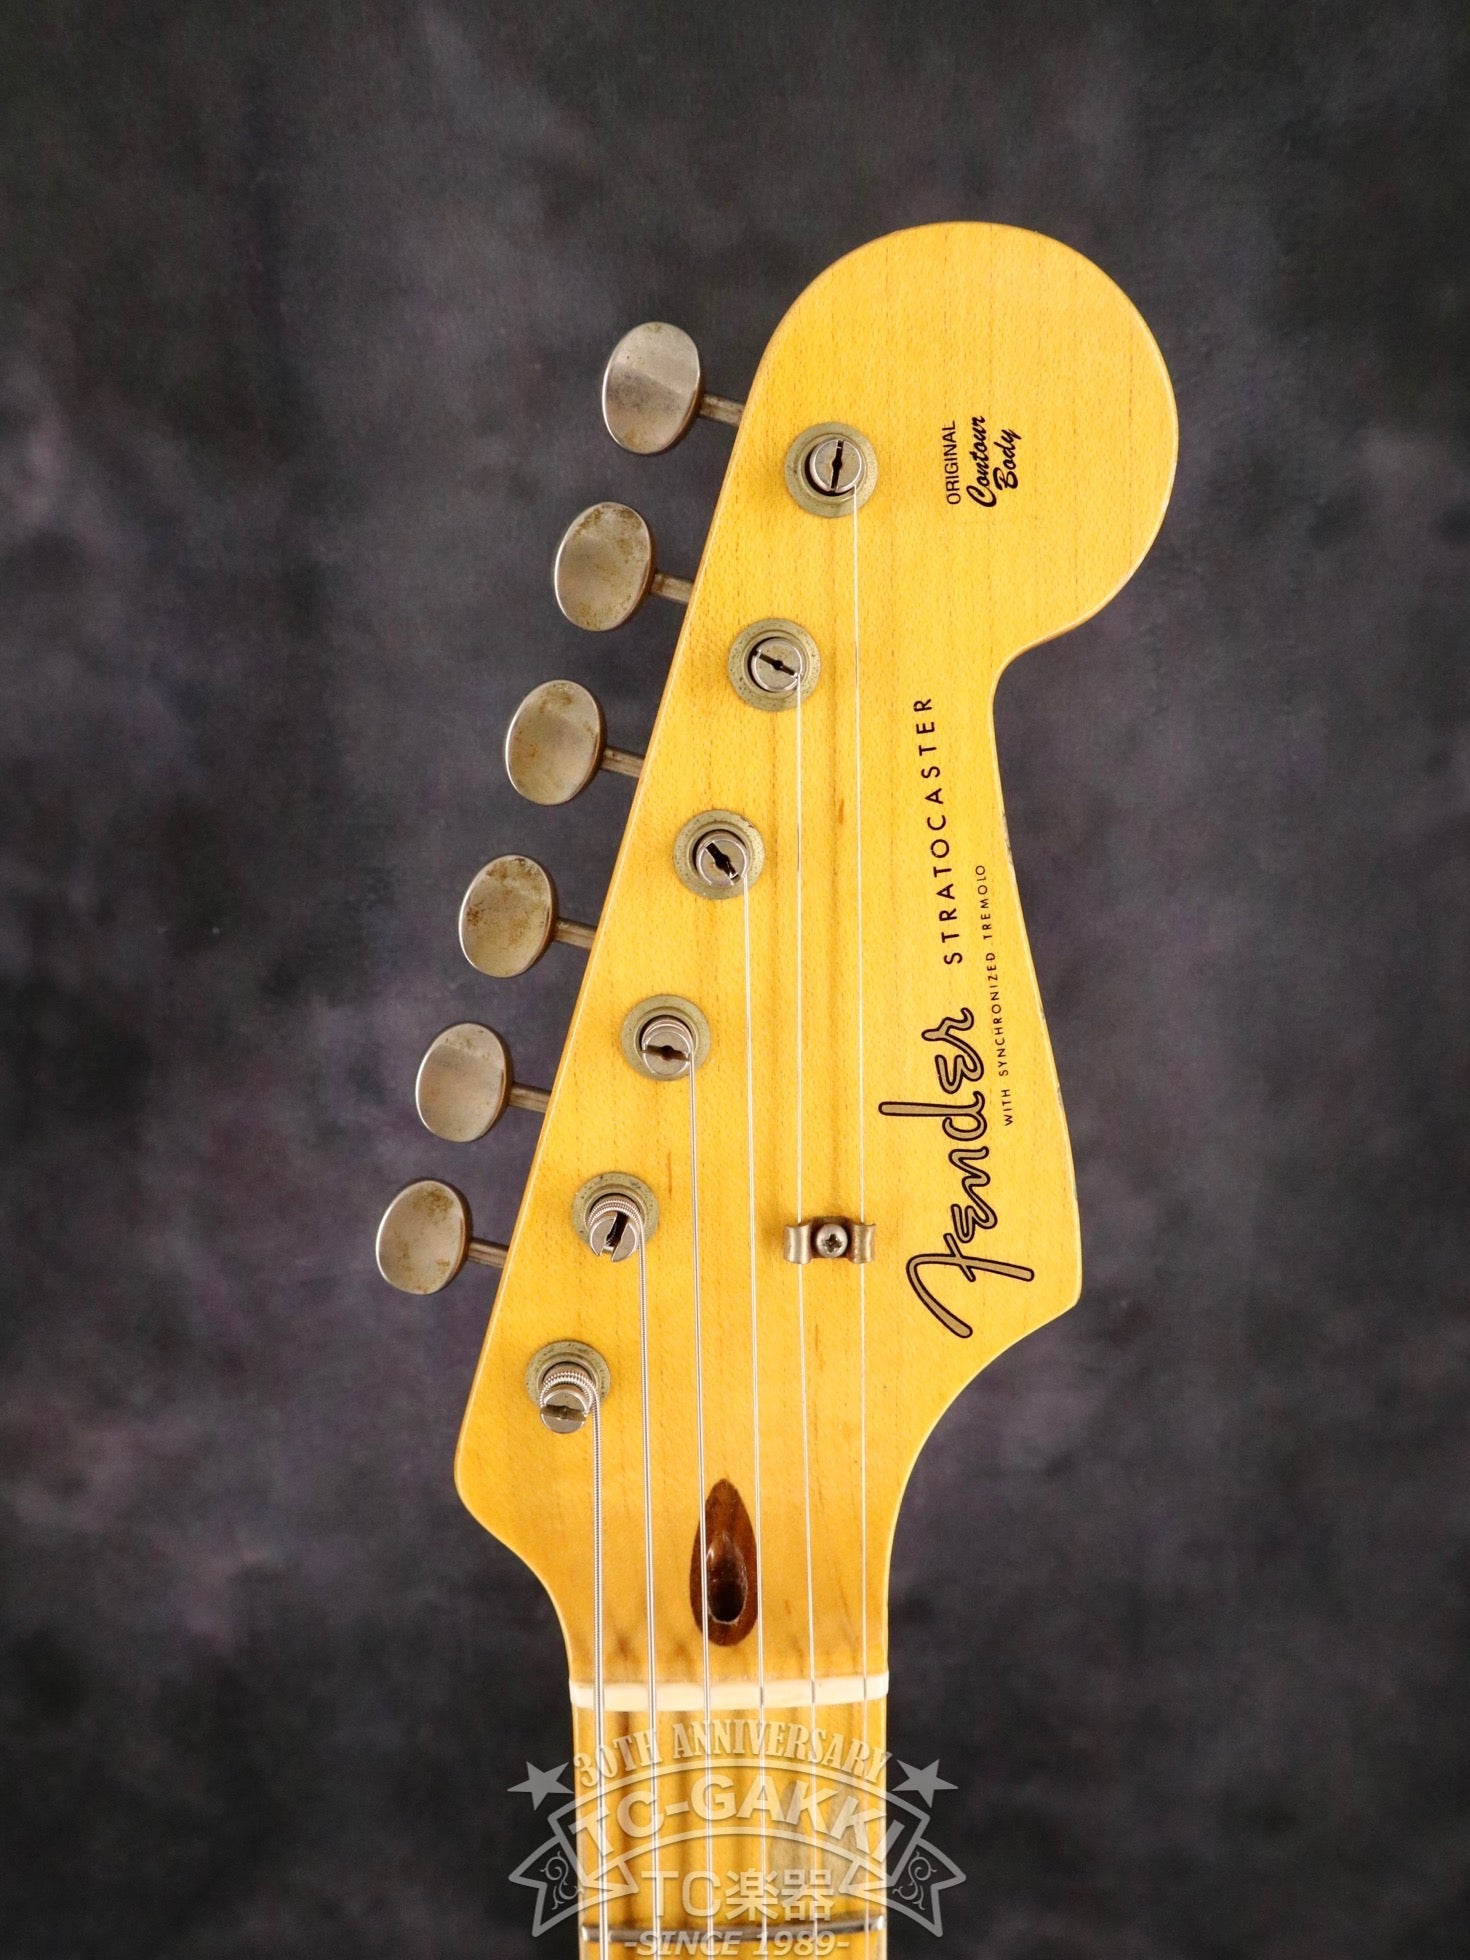 2017 Custom Clapton Stratocaster JNR - TC楽器 - TCGAKKI